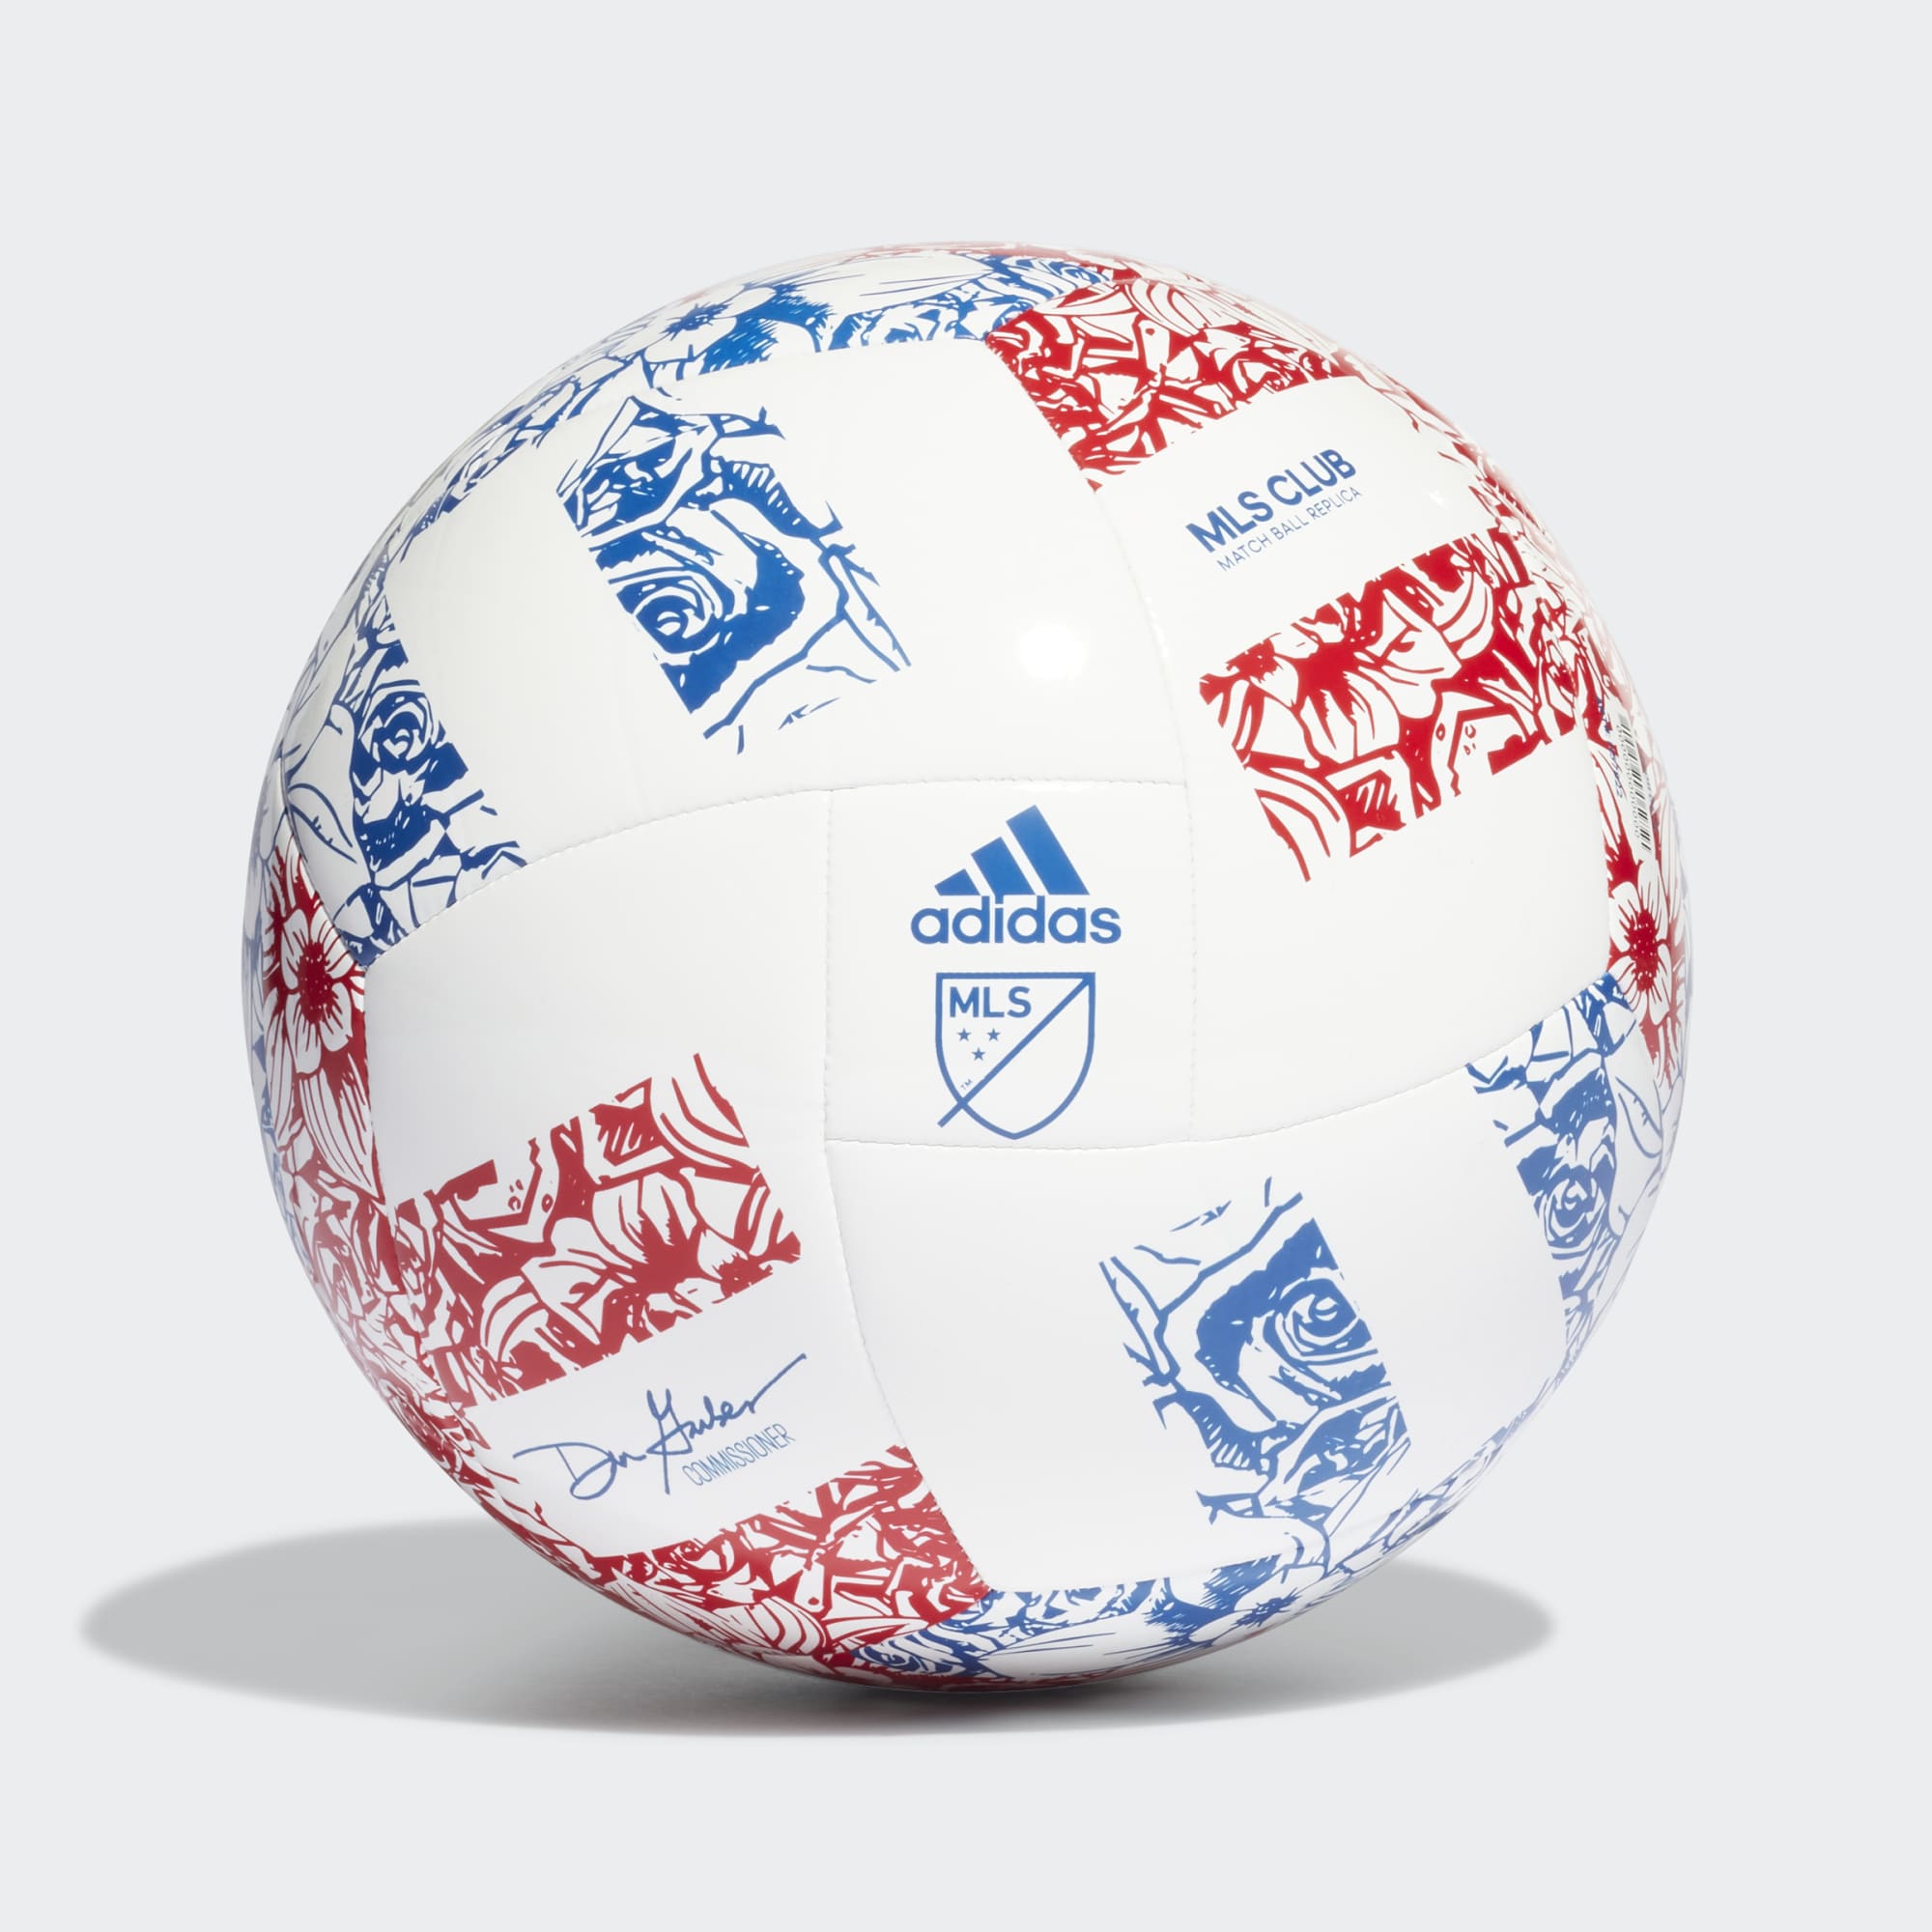 MLS CLUB SOCCER BALL